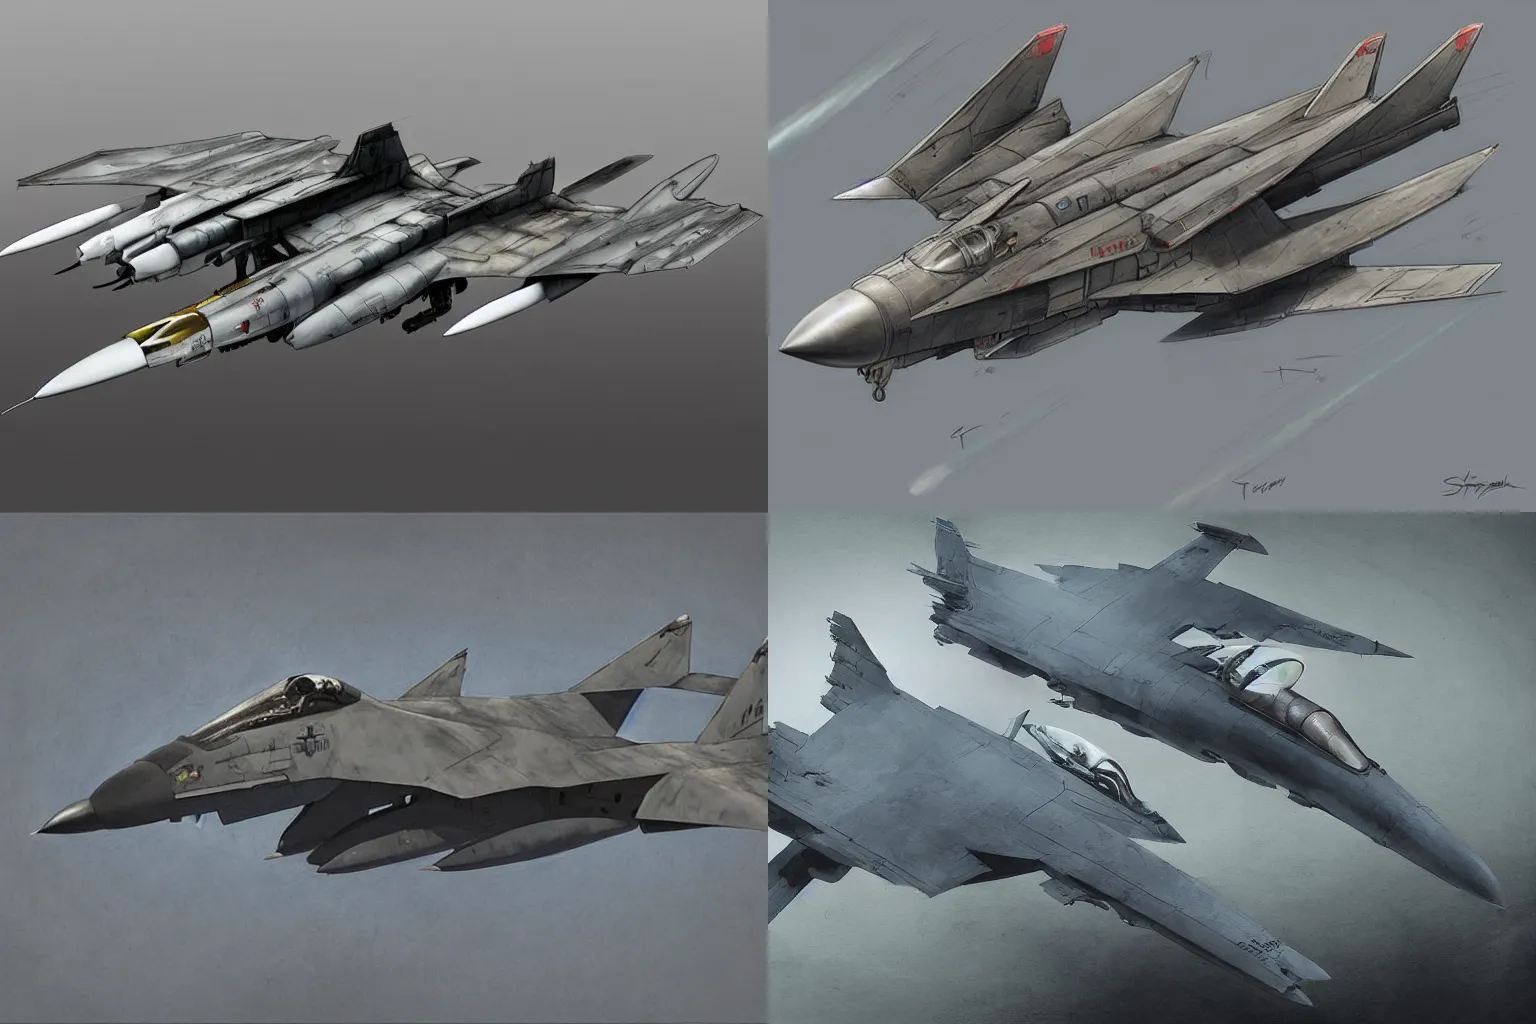 Prompt: iconic fighter jet concept designed by shaun tan, tomcat raptor hornet falcon, style of john kenn mortensen, style of yoshitaka amano